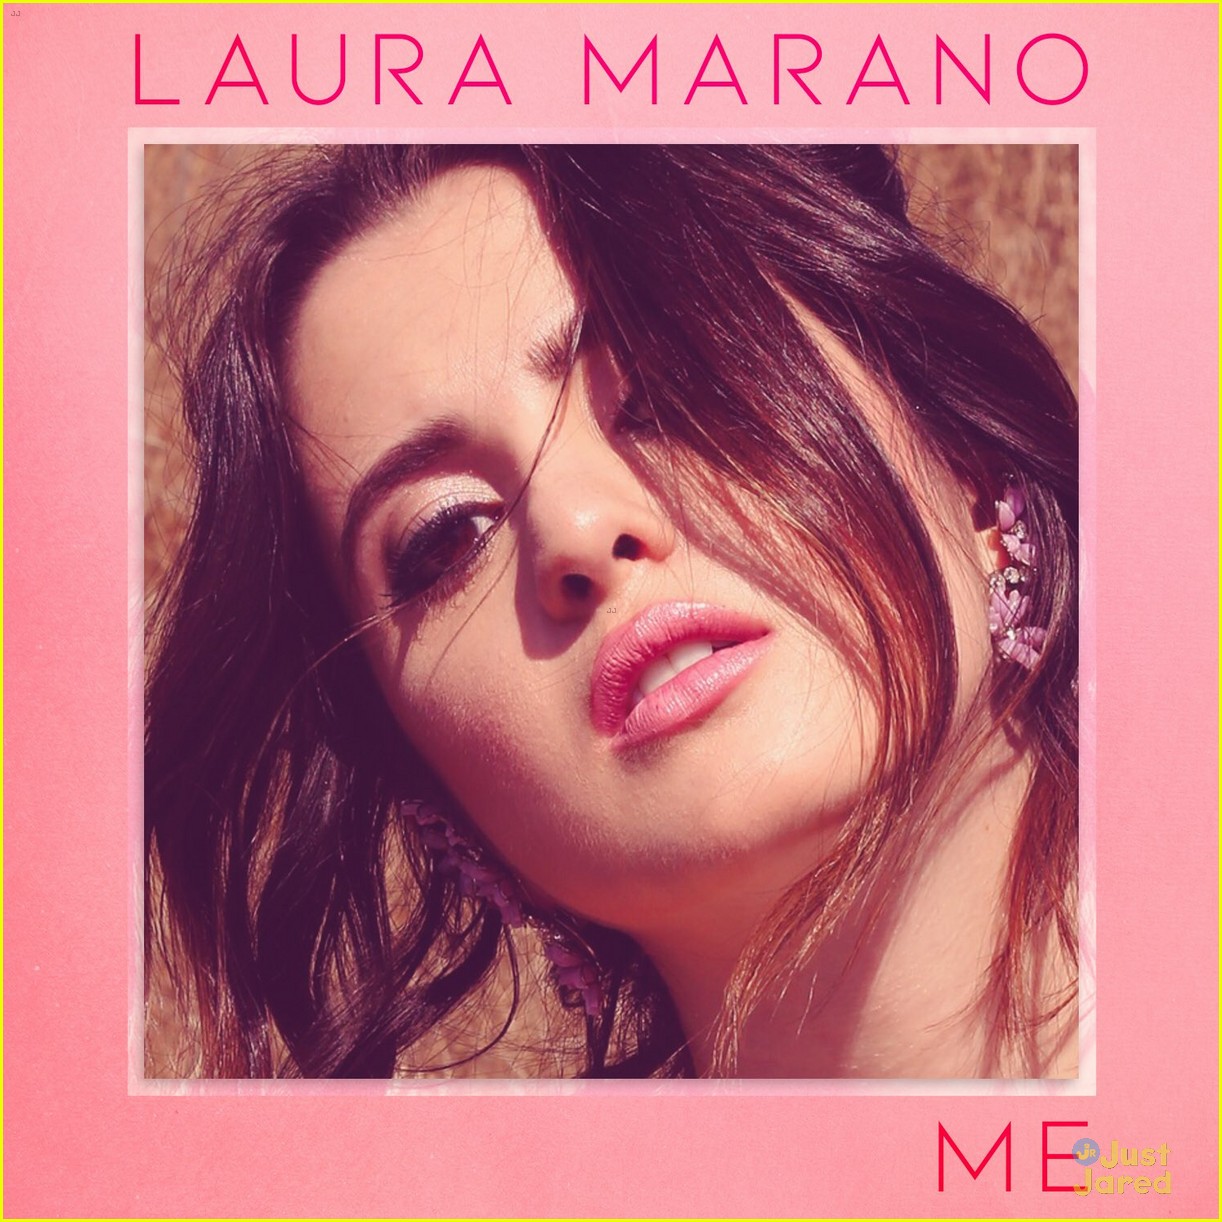 laura marano announces me single video 03